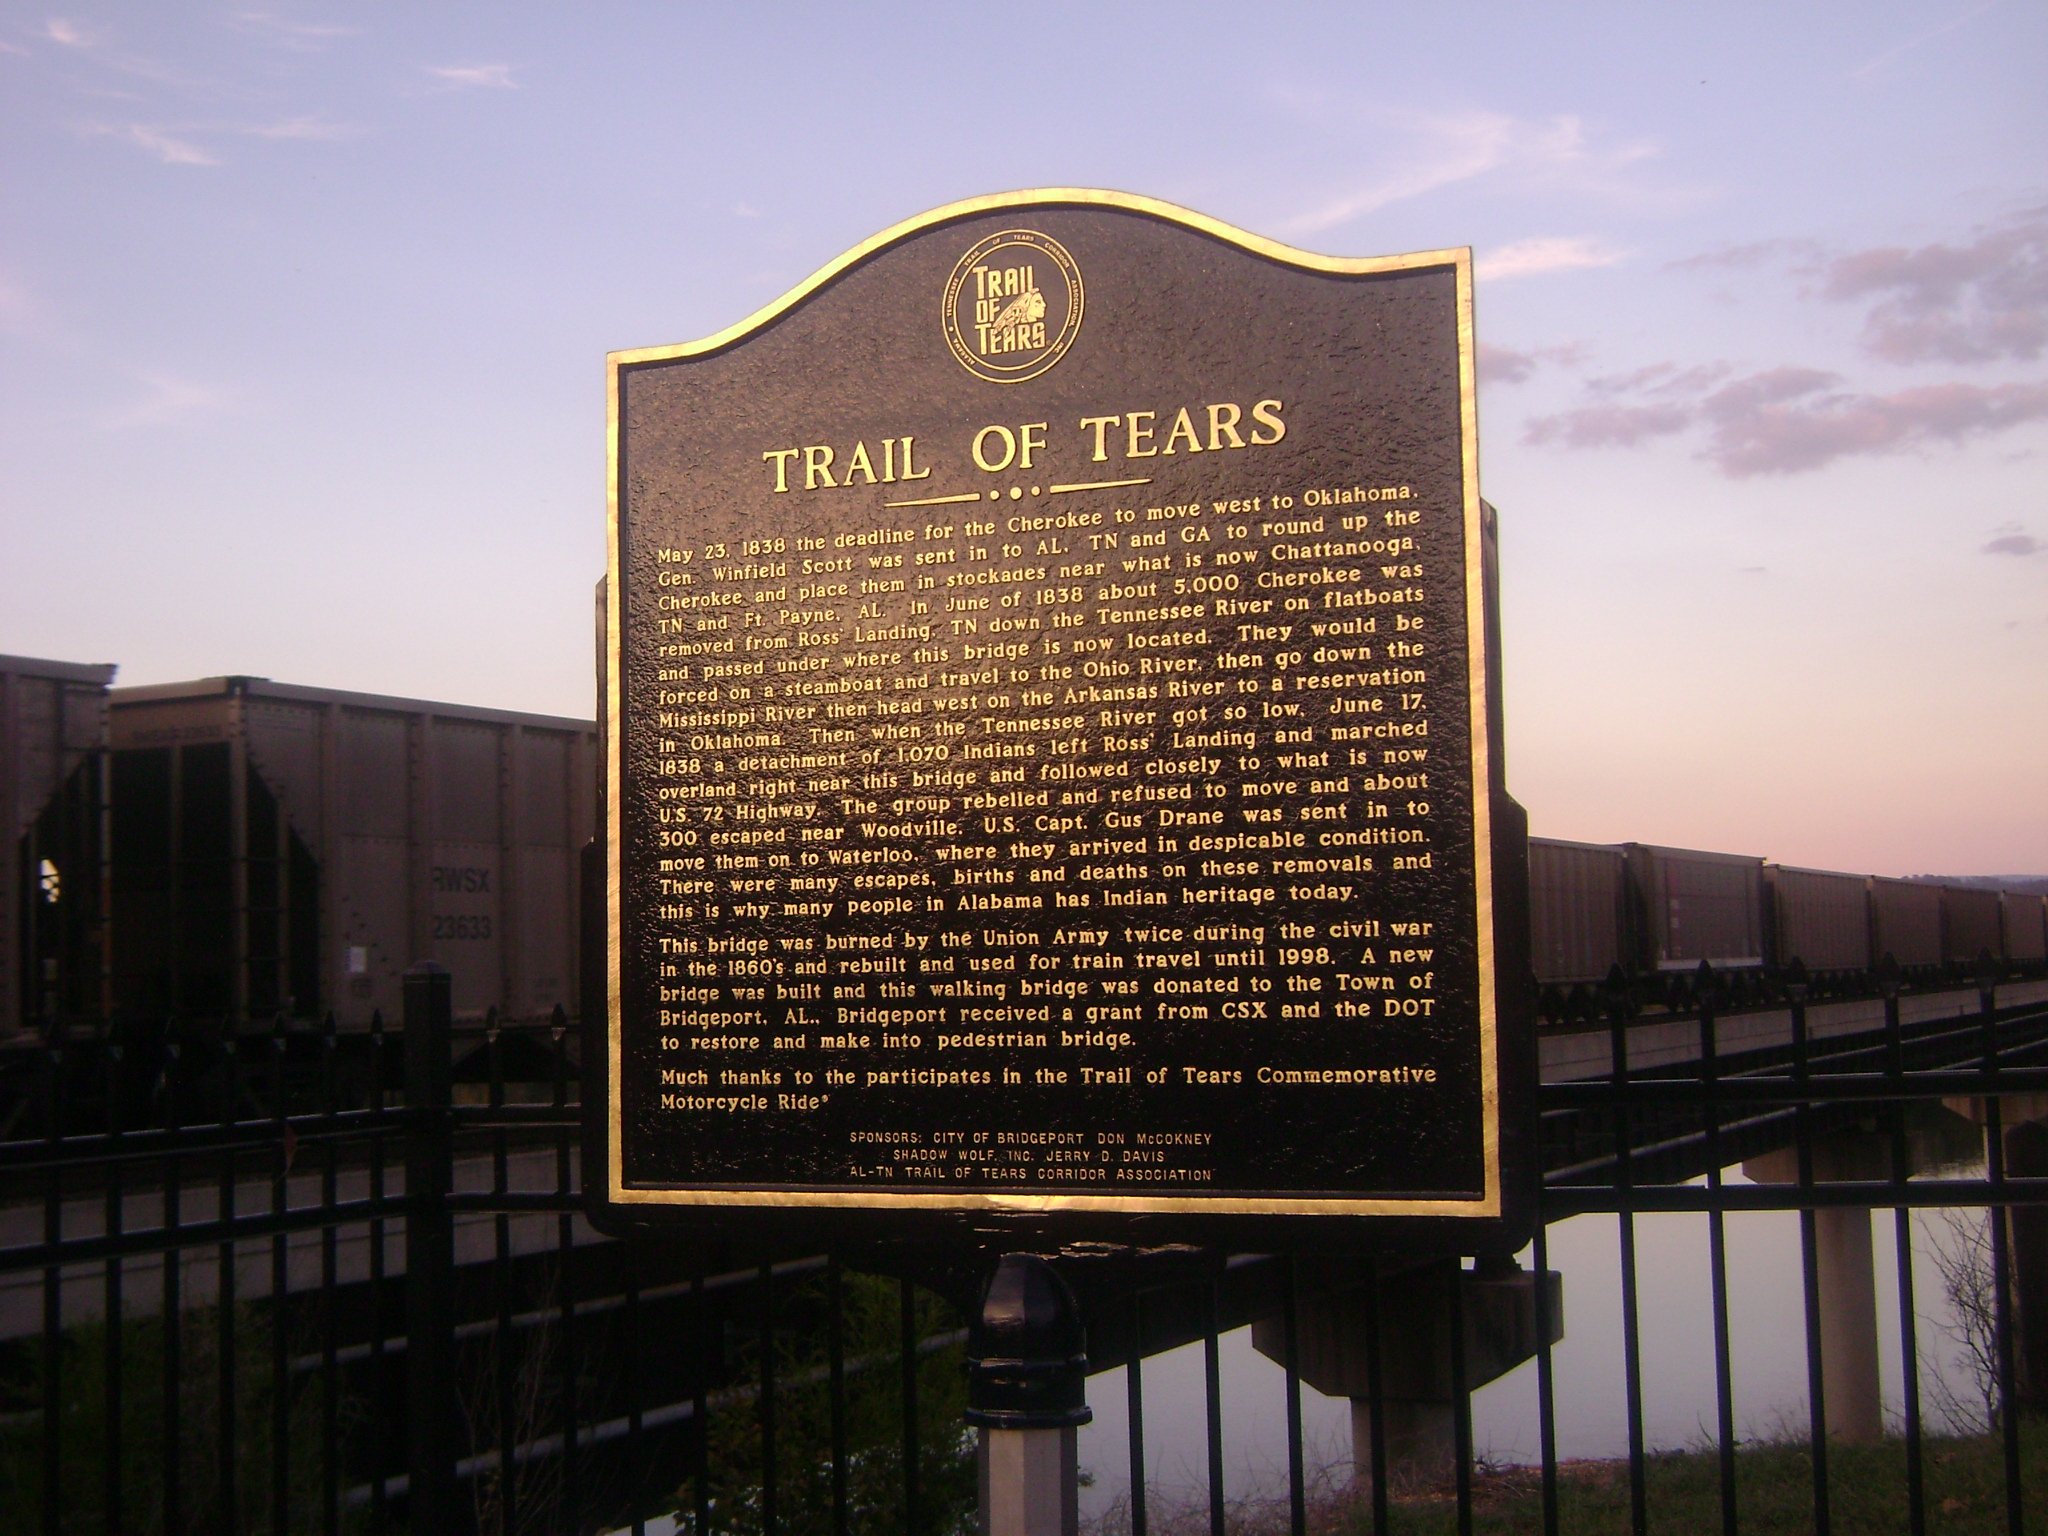 Trail of Tears Commemoration/Ride Bridgeport Alabama.Travel